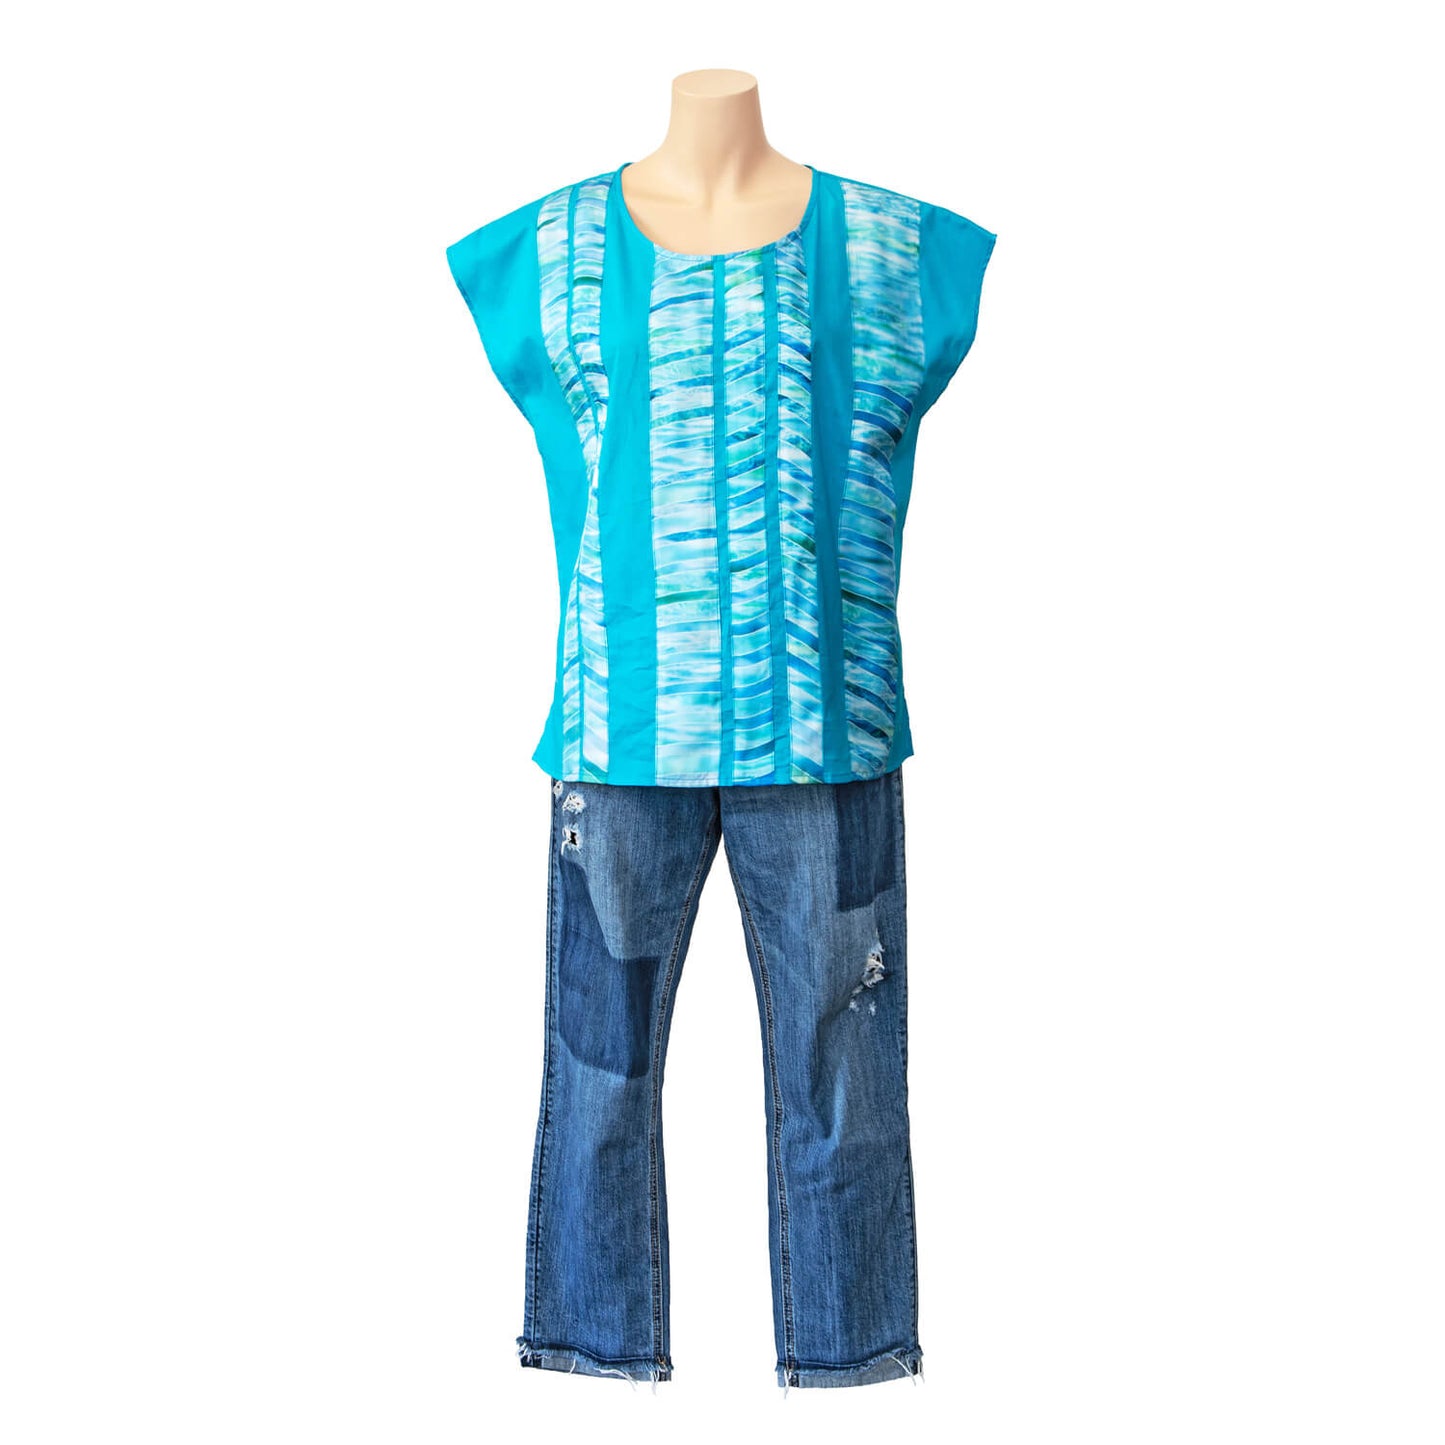 bits of florida aqua blue cotton silk trim top worn loose over jeans